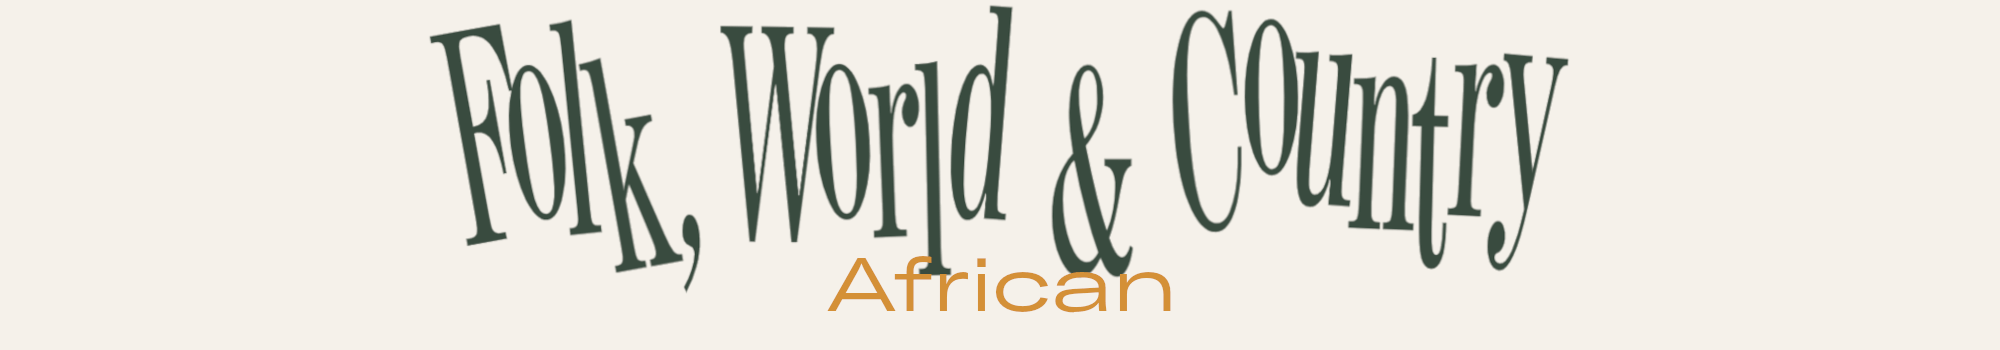 Rubrik till kategori: Folk, World & Country - African